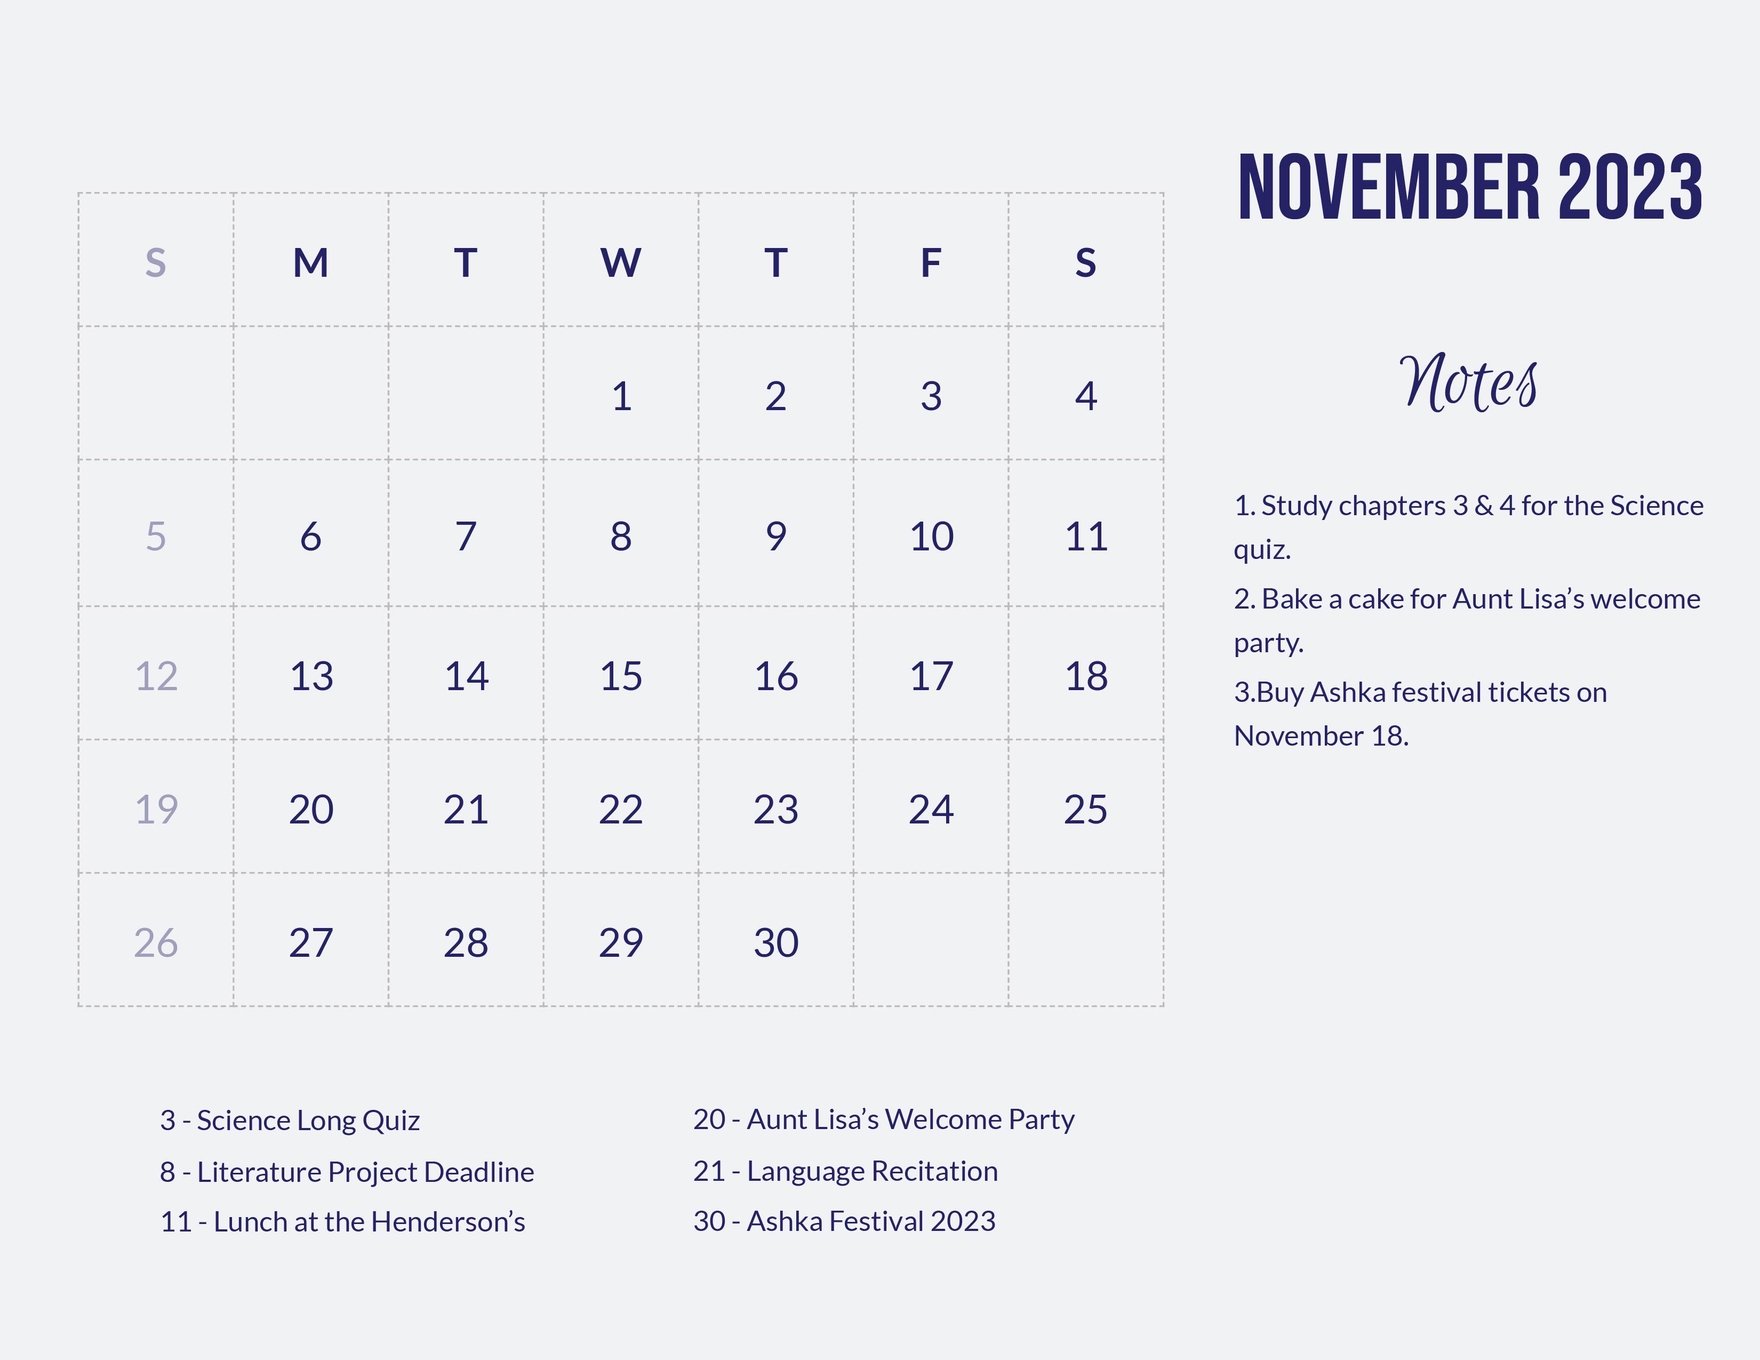 Free November 2023 Calendar Template in Word, Google Docs, Excel, Google Sheets, Illustrator, EPS, SVG, JPG